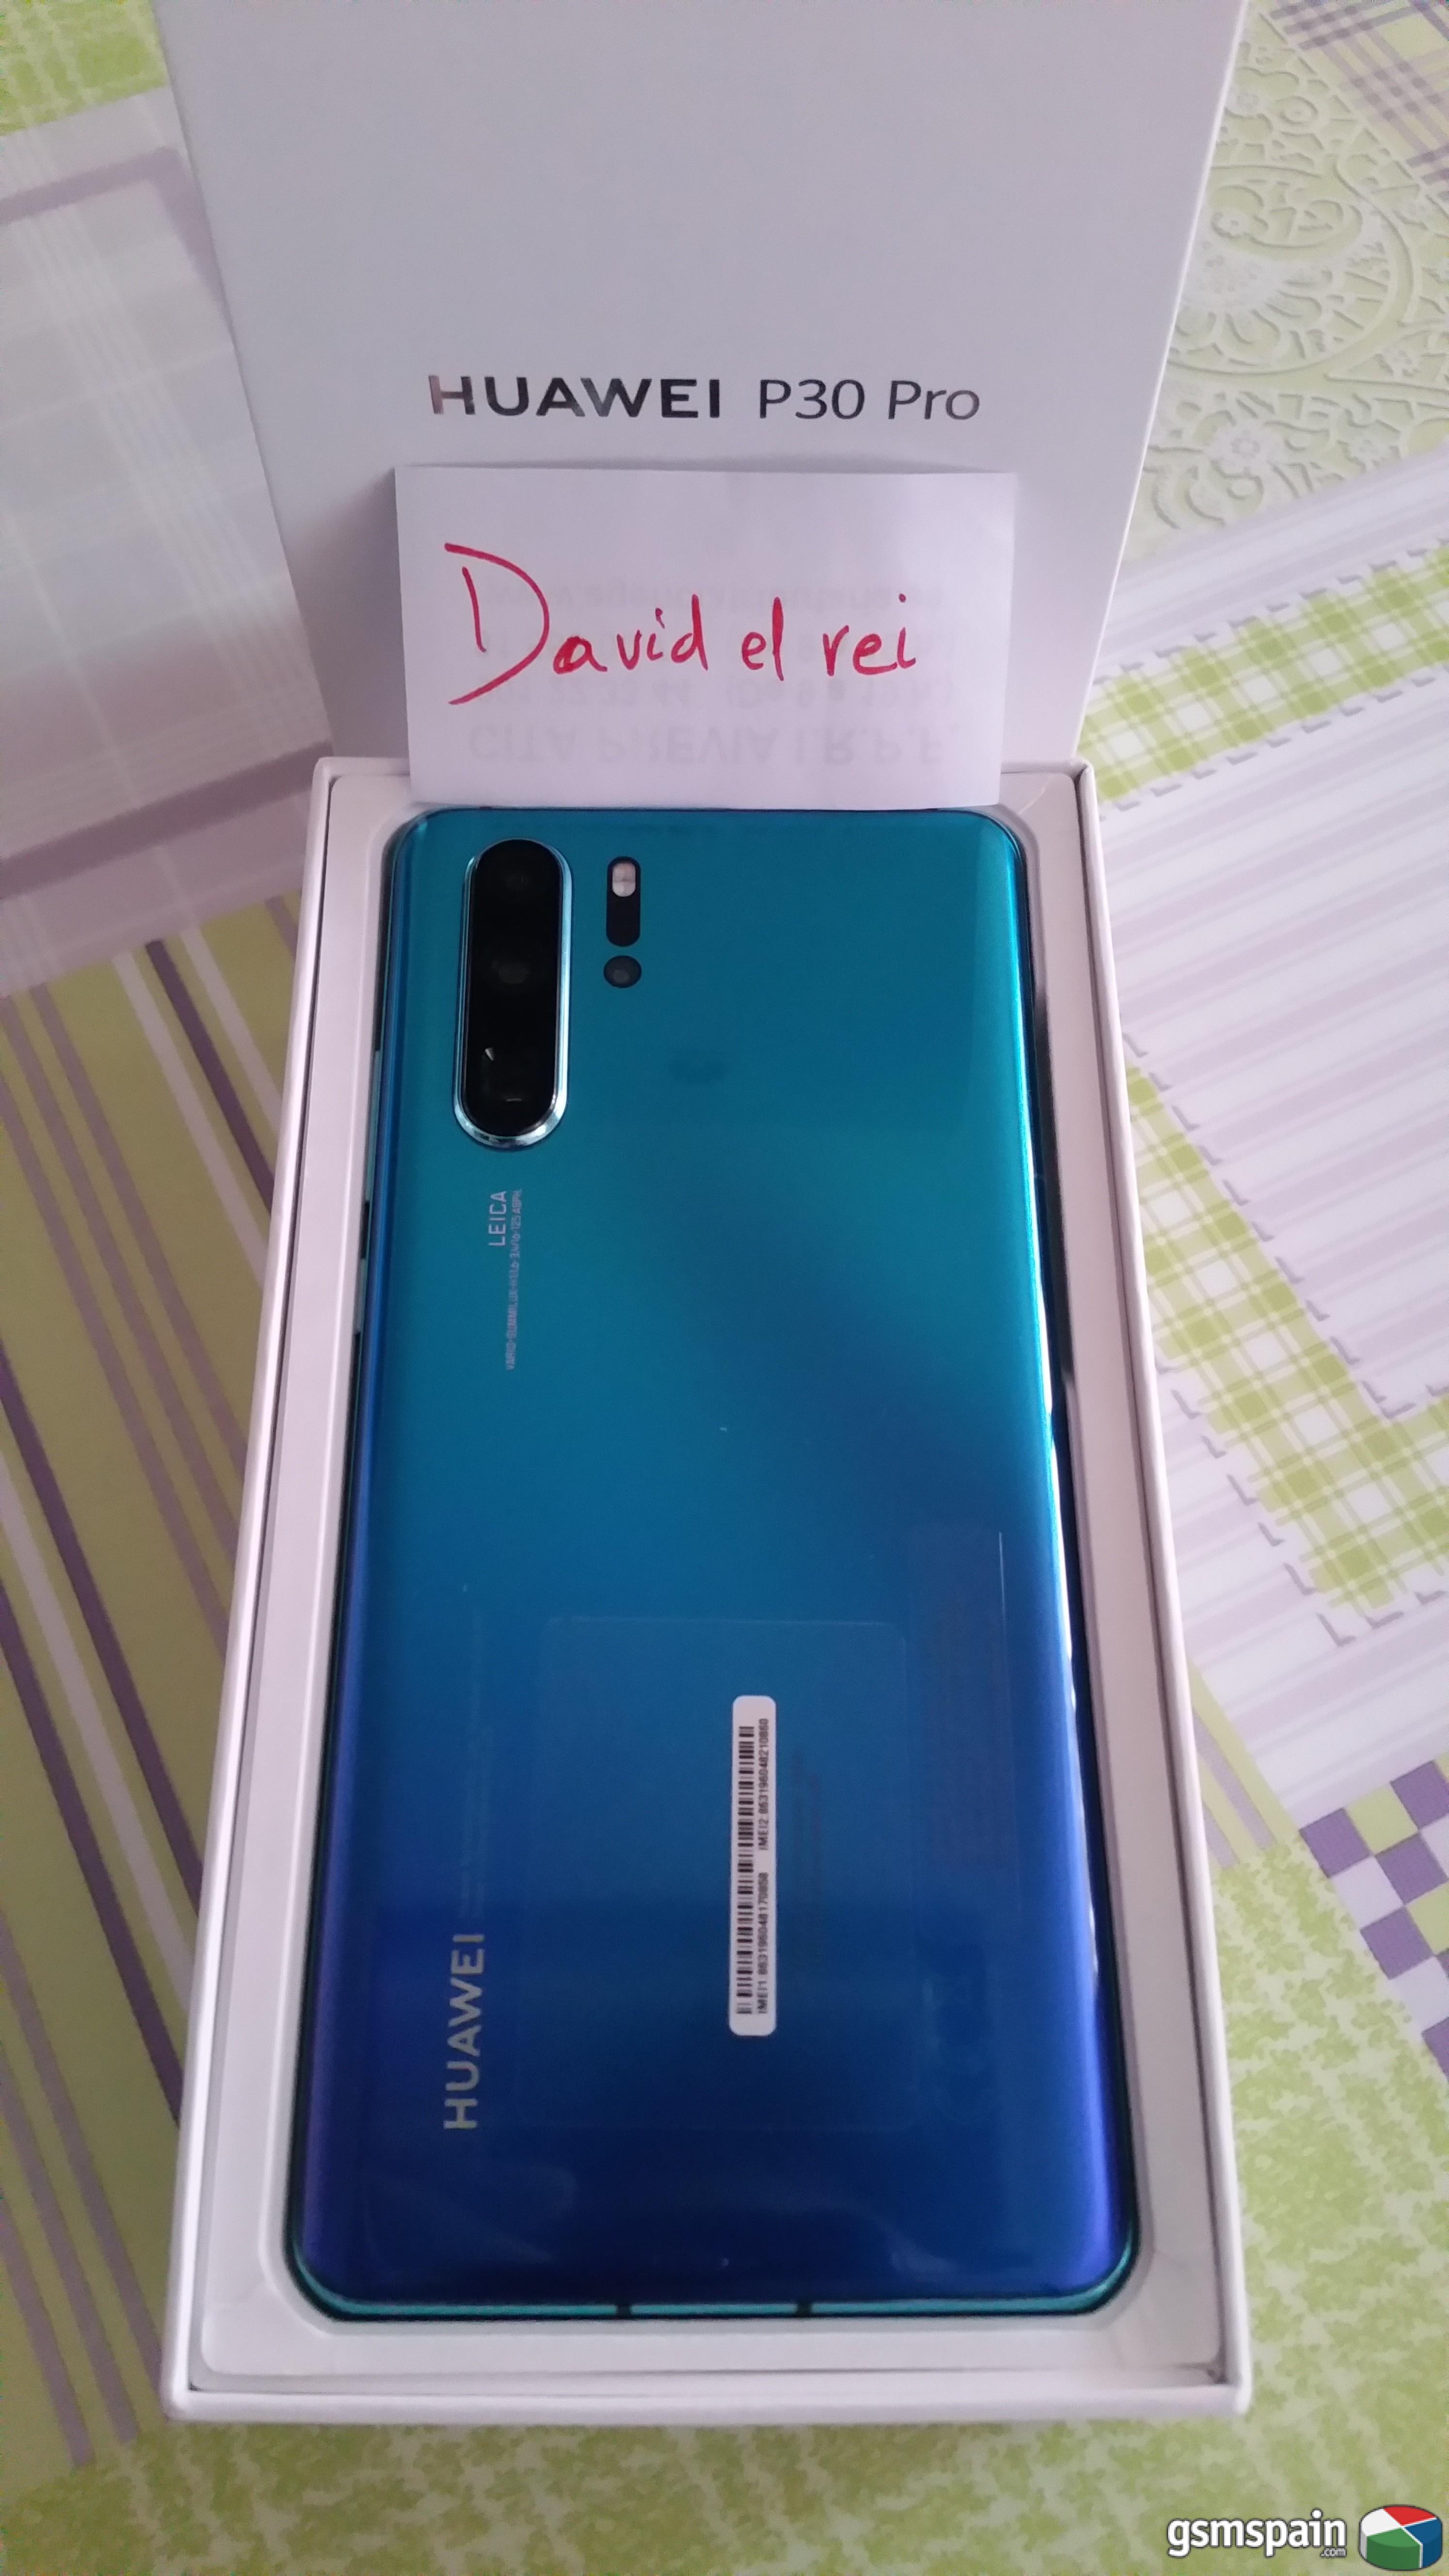 [VENDO] Huawei P30 Pro Dual SIM, Nuevo color Aurora